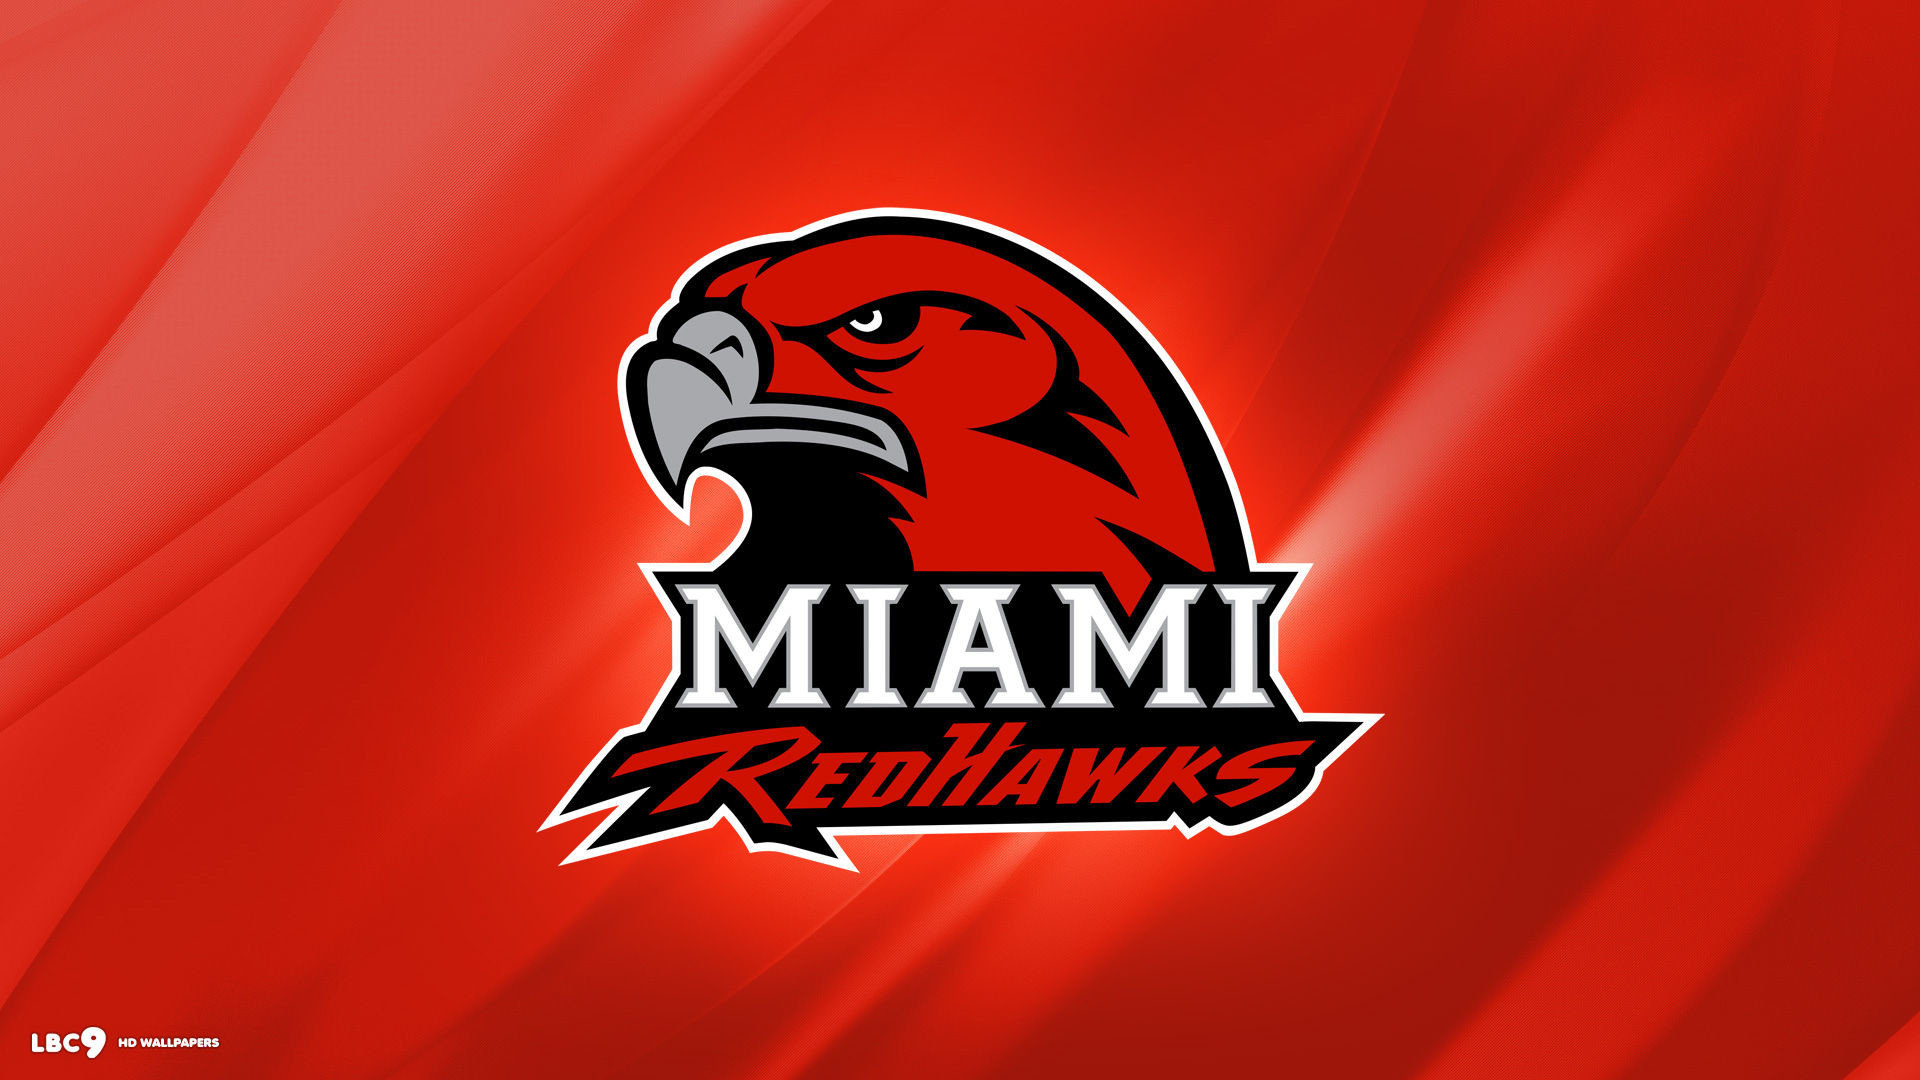 Miami redhawks